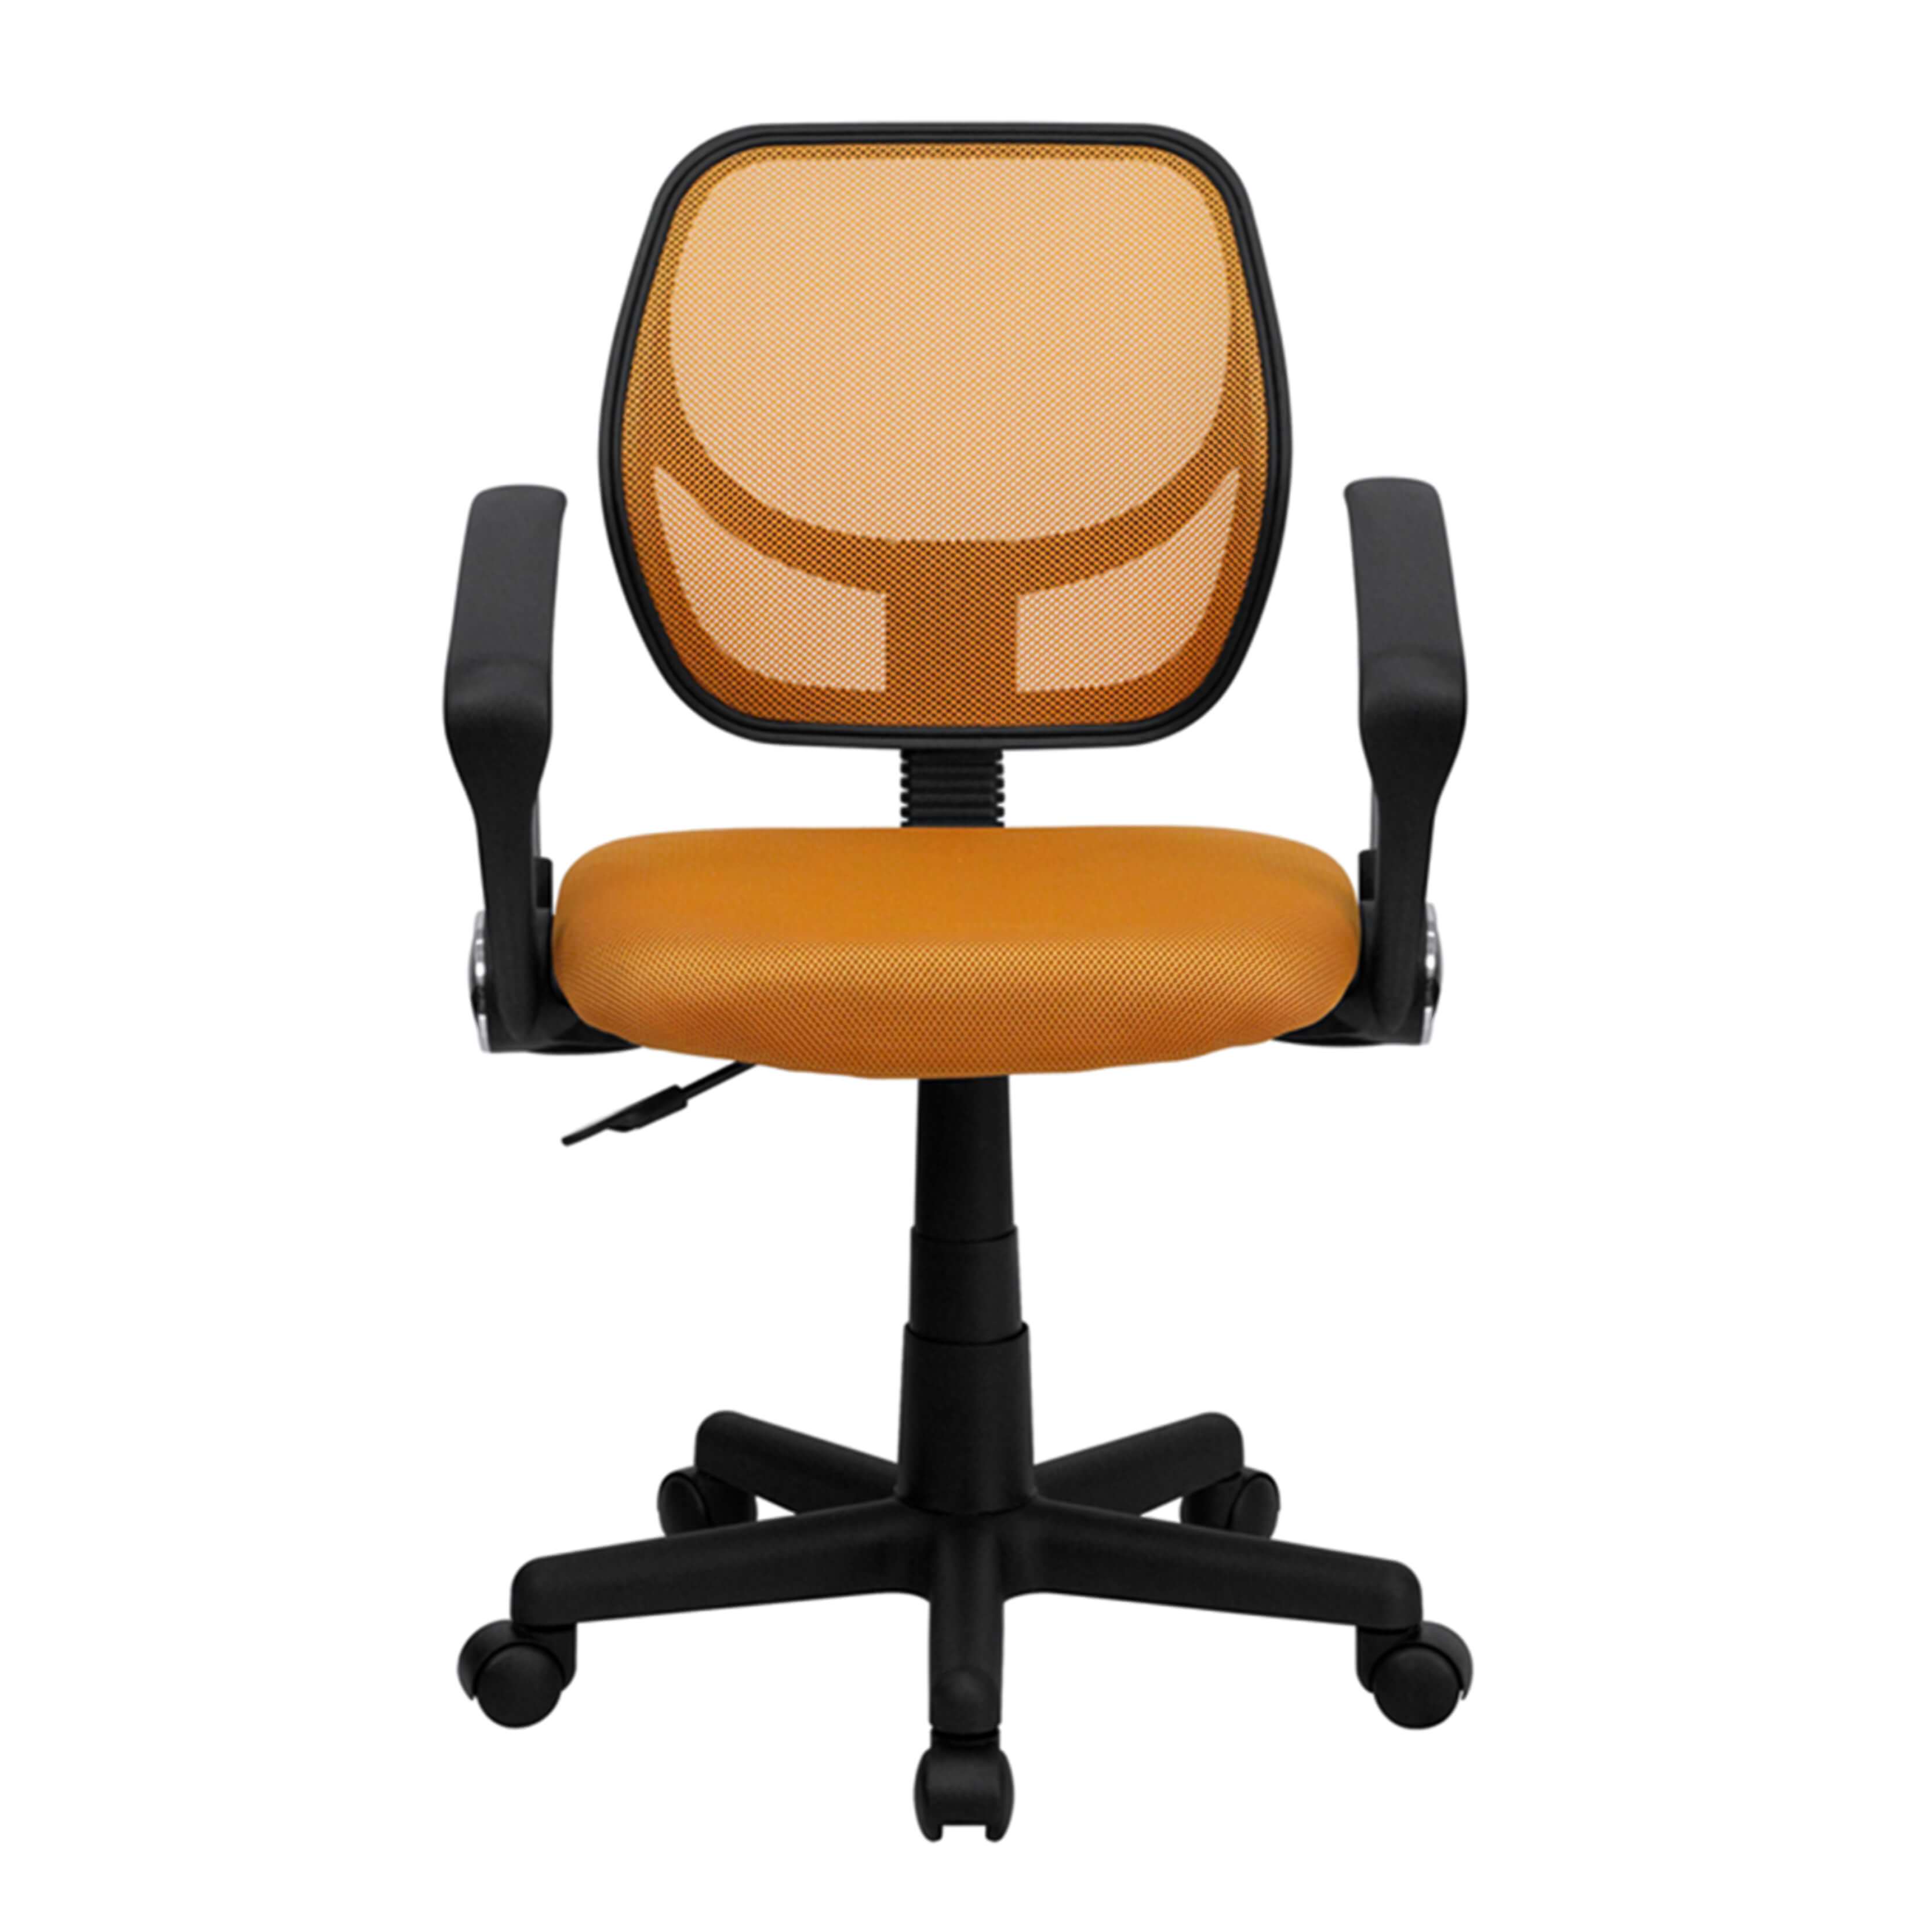 Colorful desk chairs CUB WA 3074 OR A GG FLA